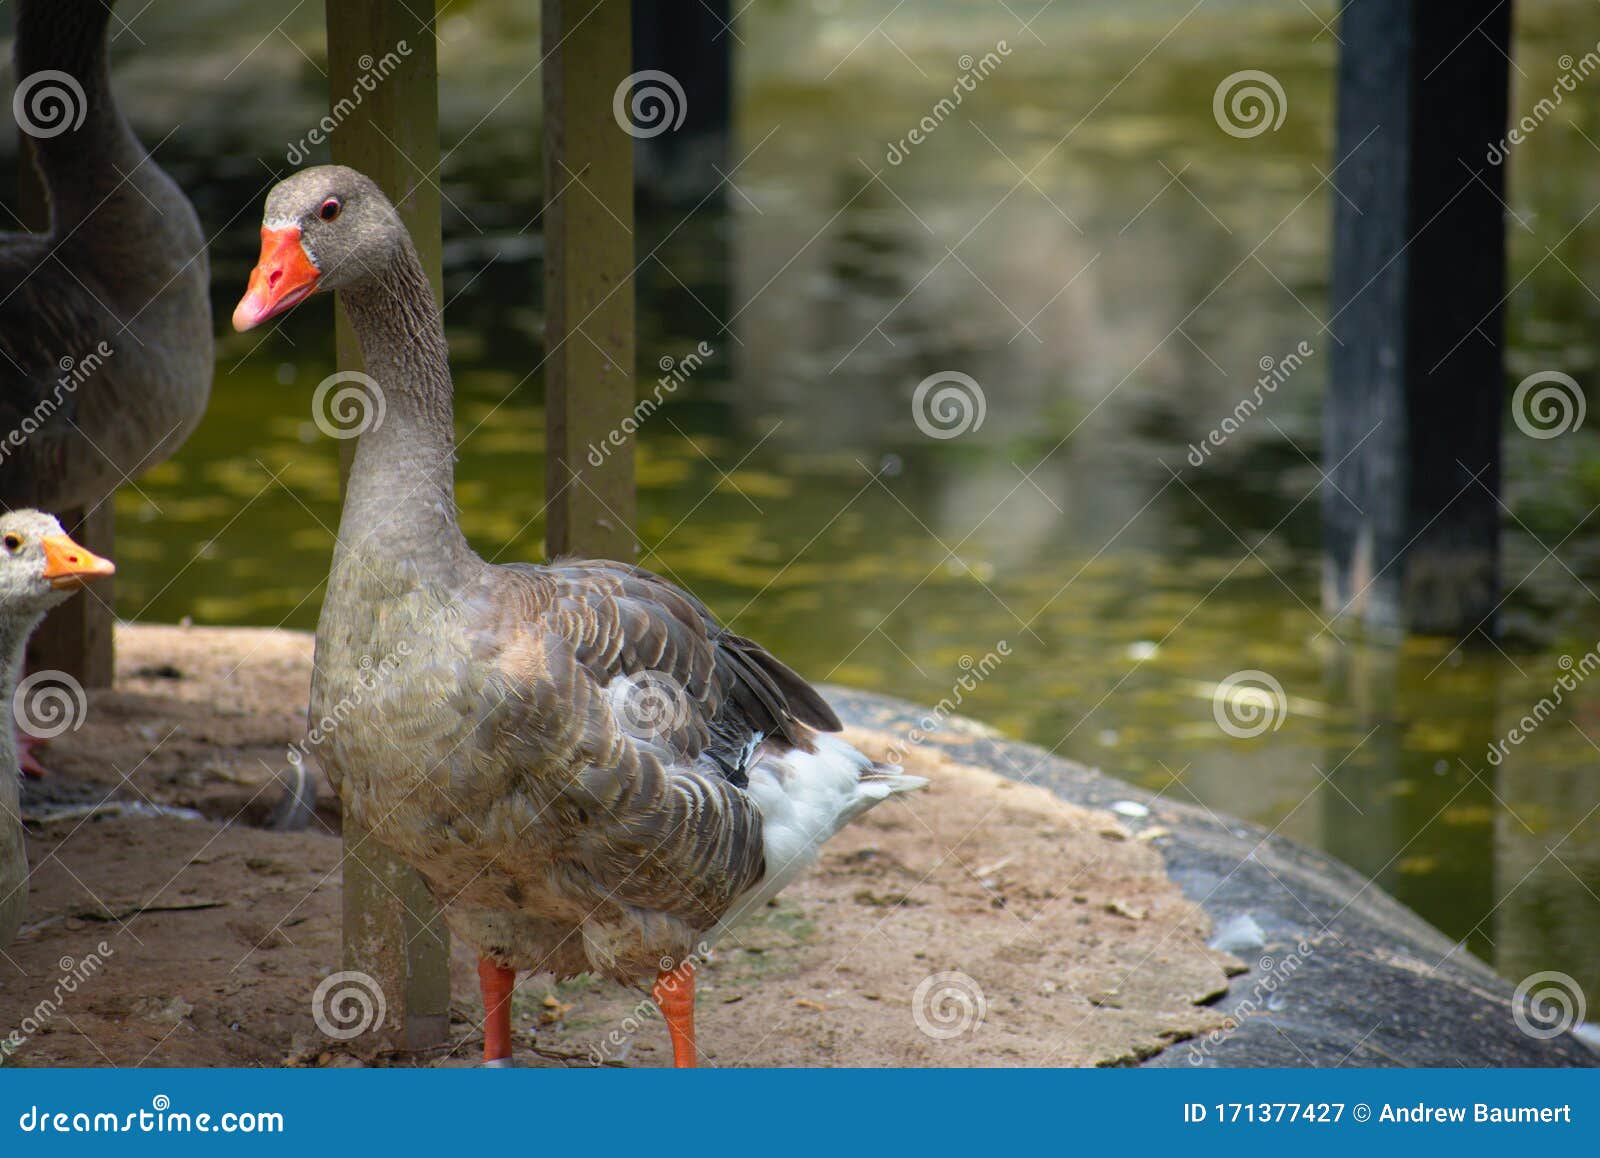 brown goose walking near a pond in barranco miraflores lima peru